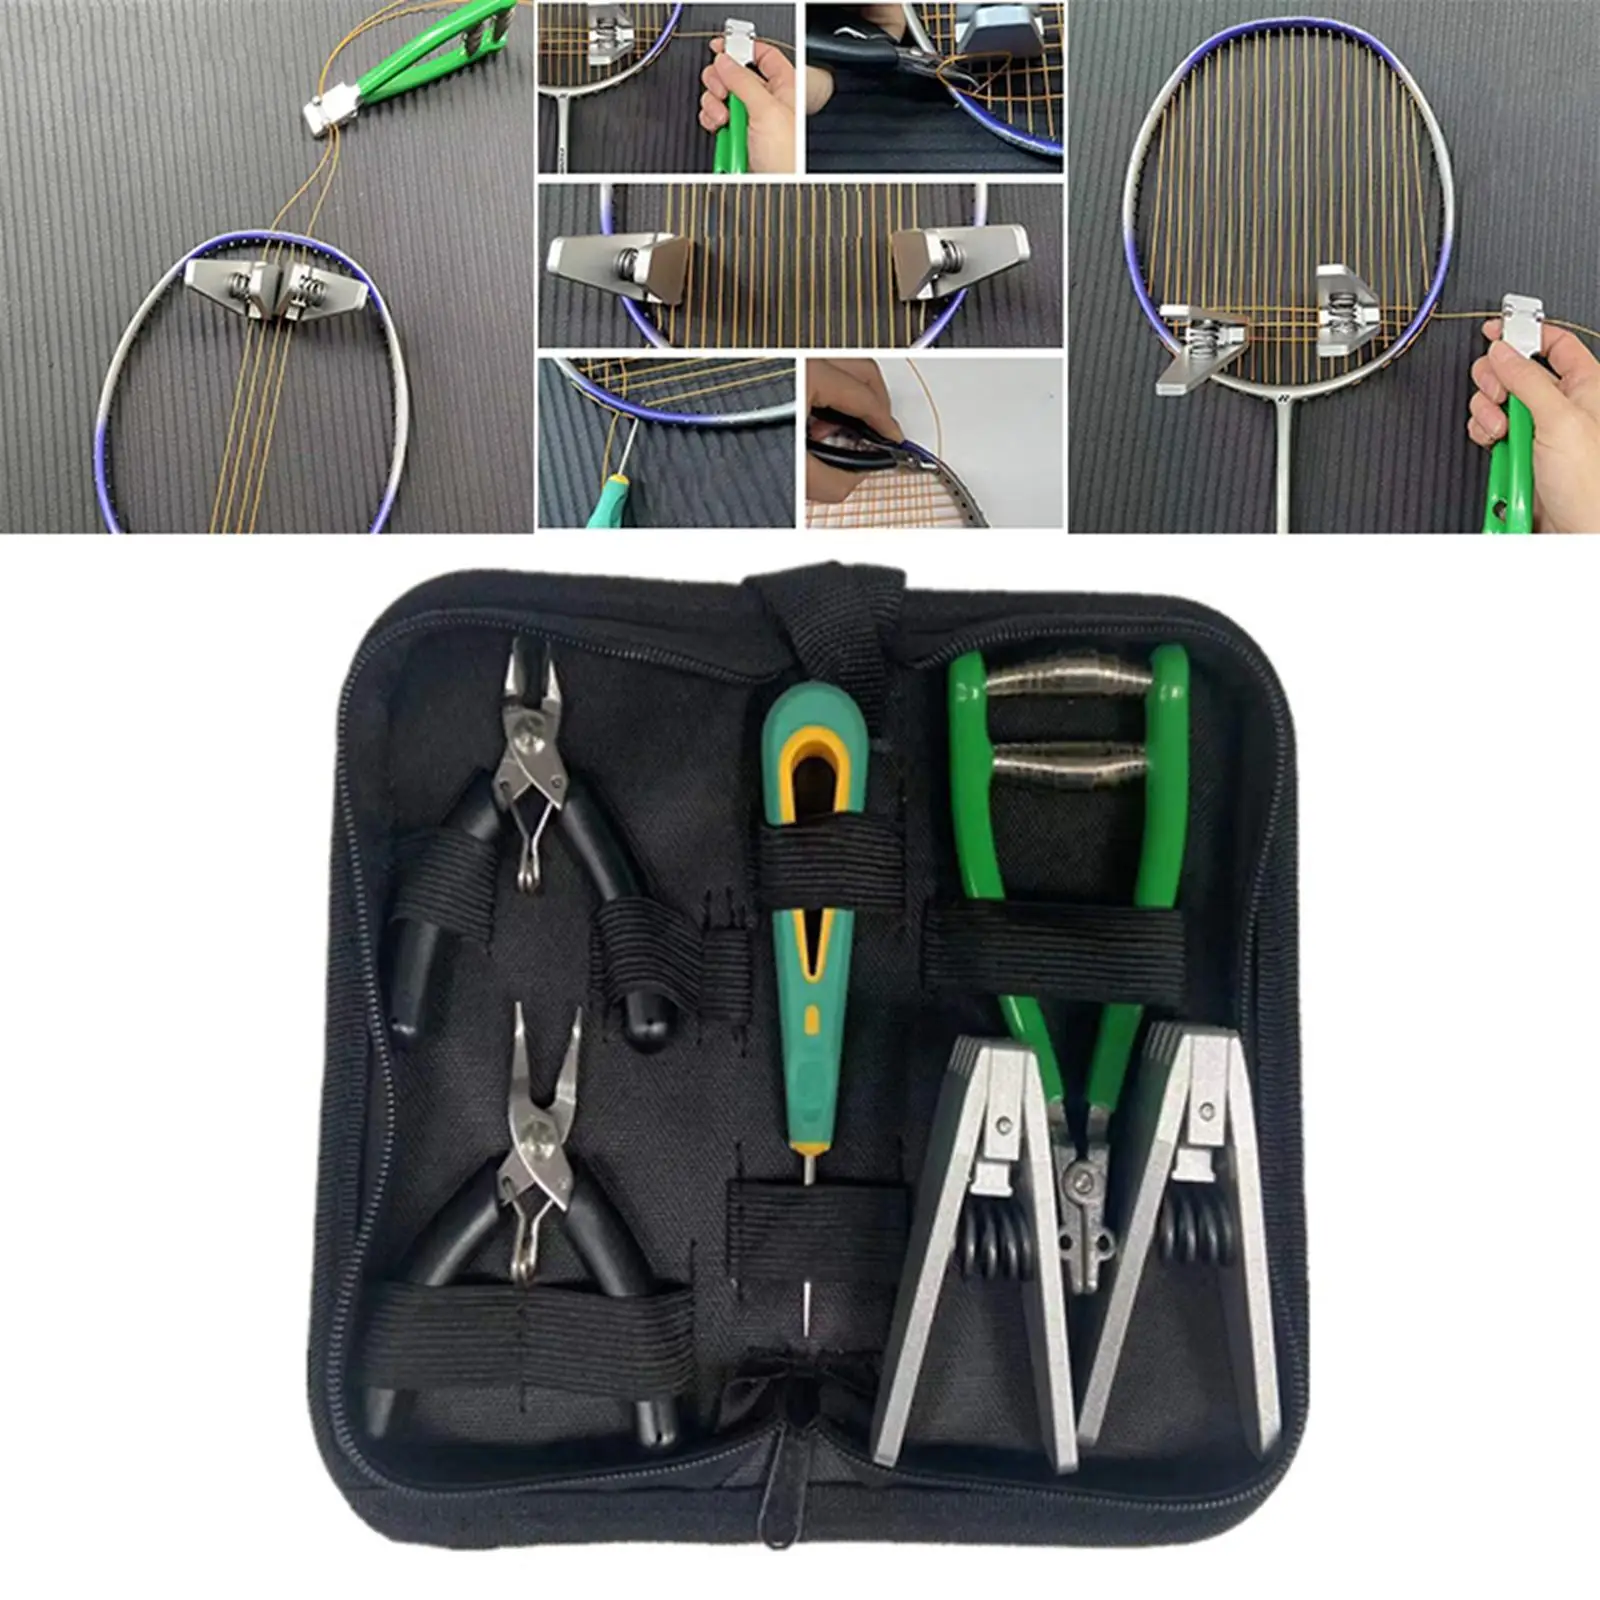 Portable Starting Stringing Clamp Tool Kit Nippers Stringing Machine Starter Awl Tennis Stringer Pro for Badminton Tennis Racket